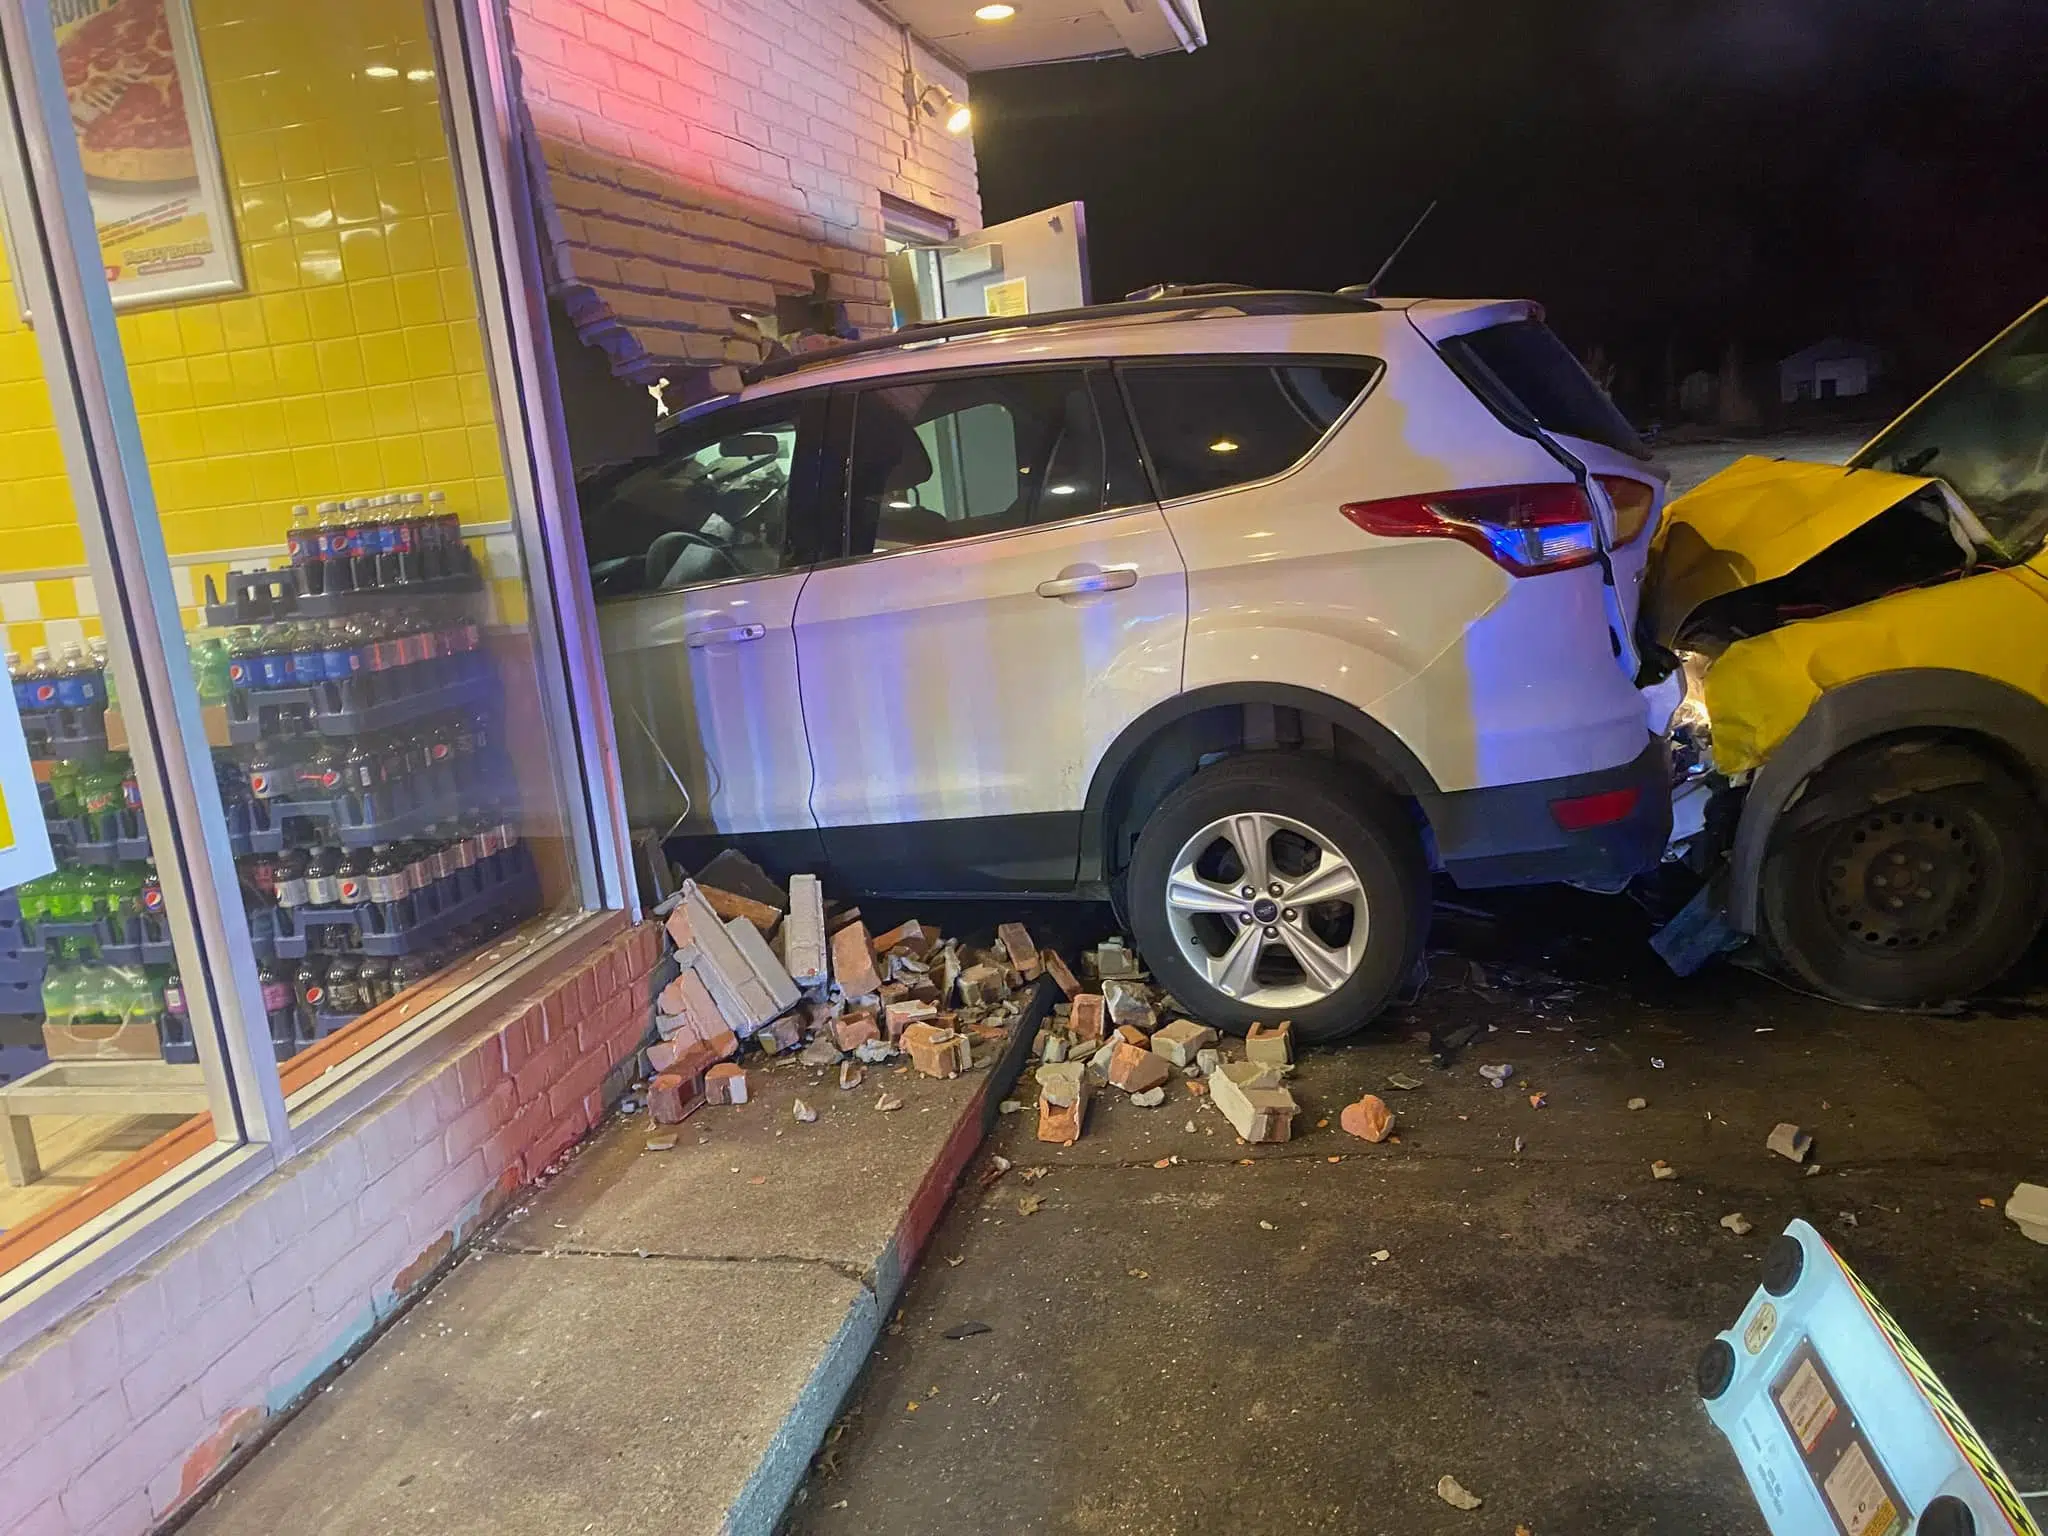 Walnut Creek: Burglars crash SUV into Louis Vuitton store : r/bayarea